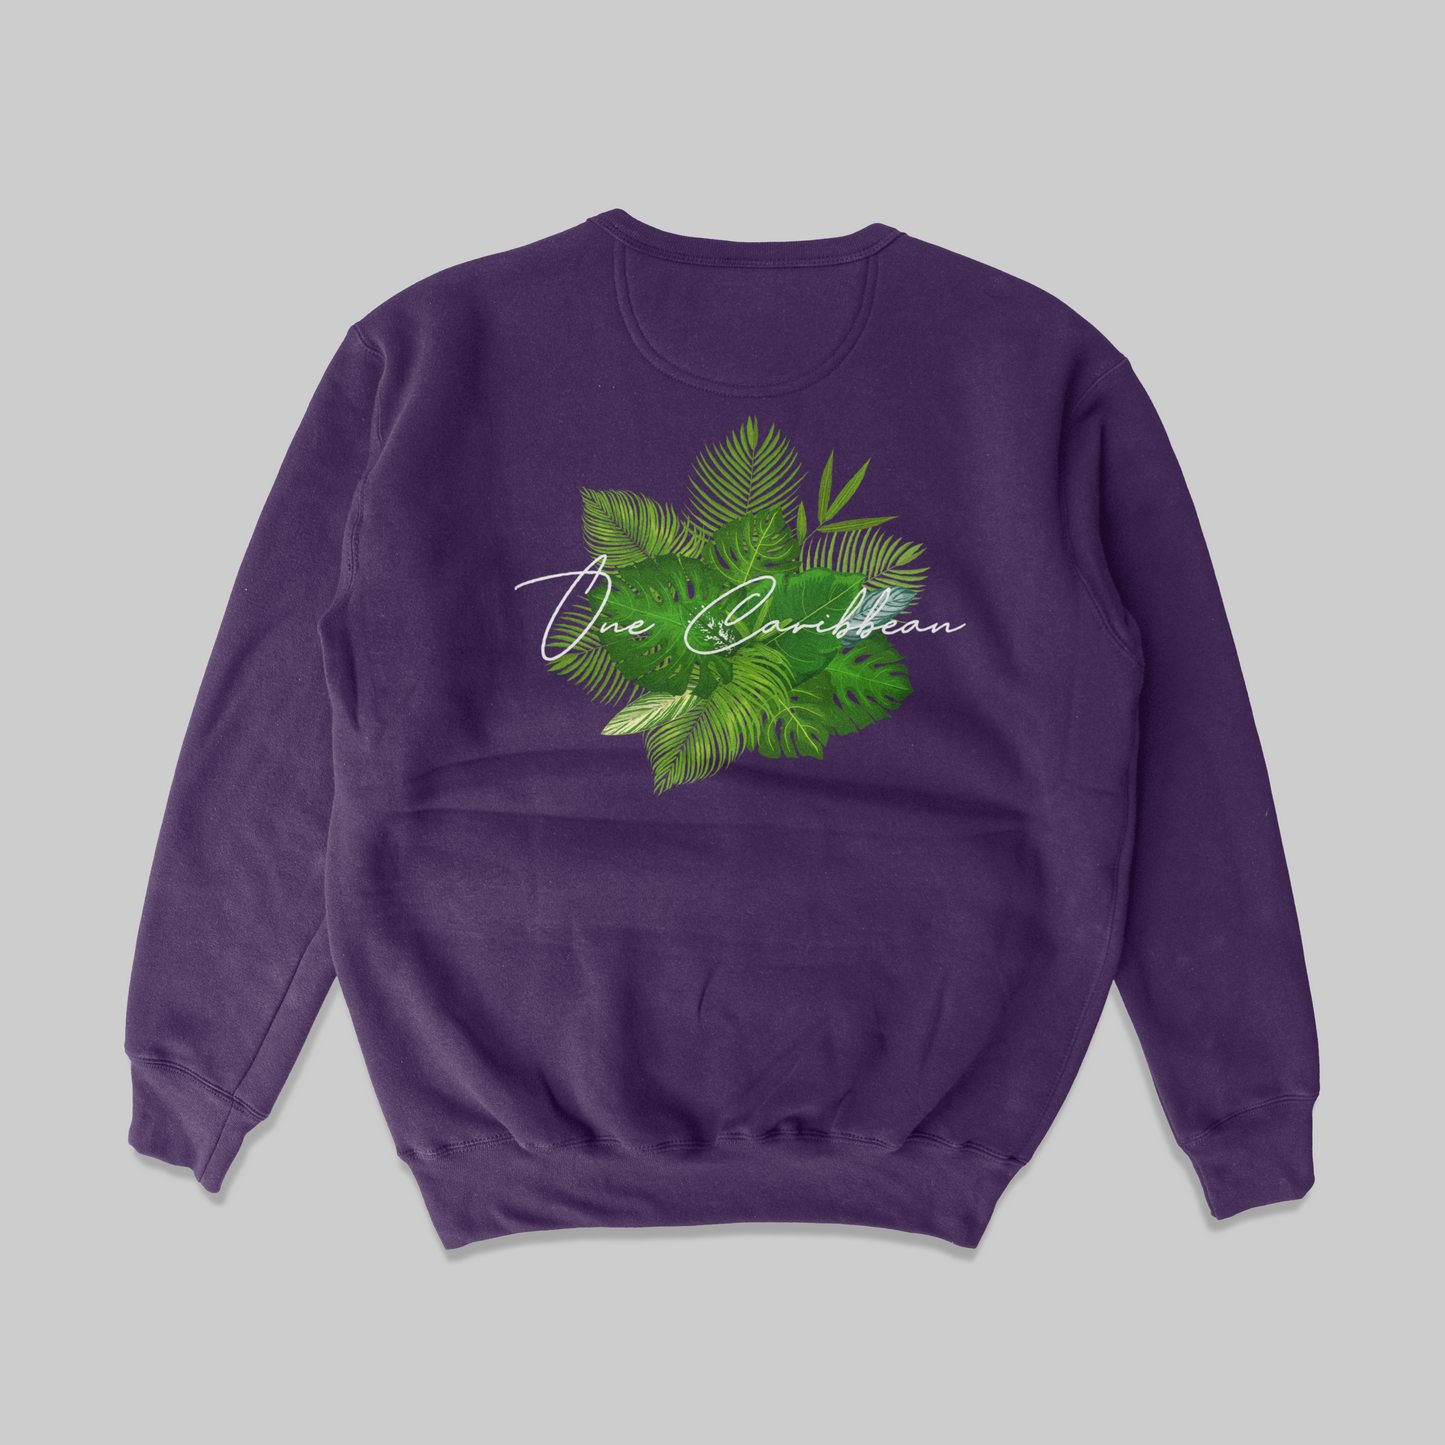 One Caribbean Bush Tee (Purple Sweater)